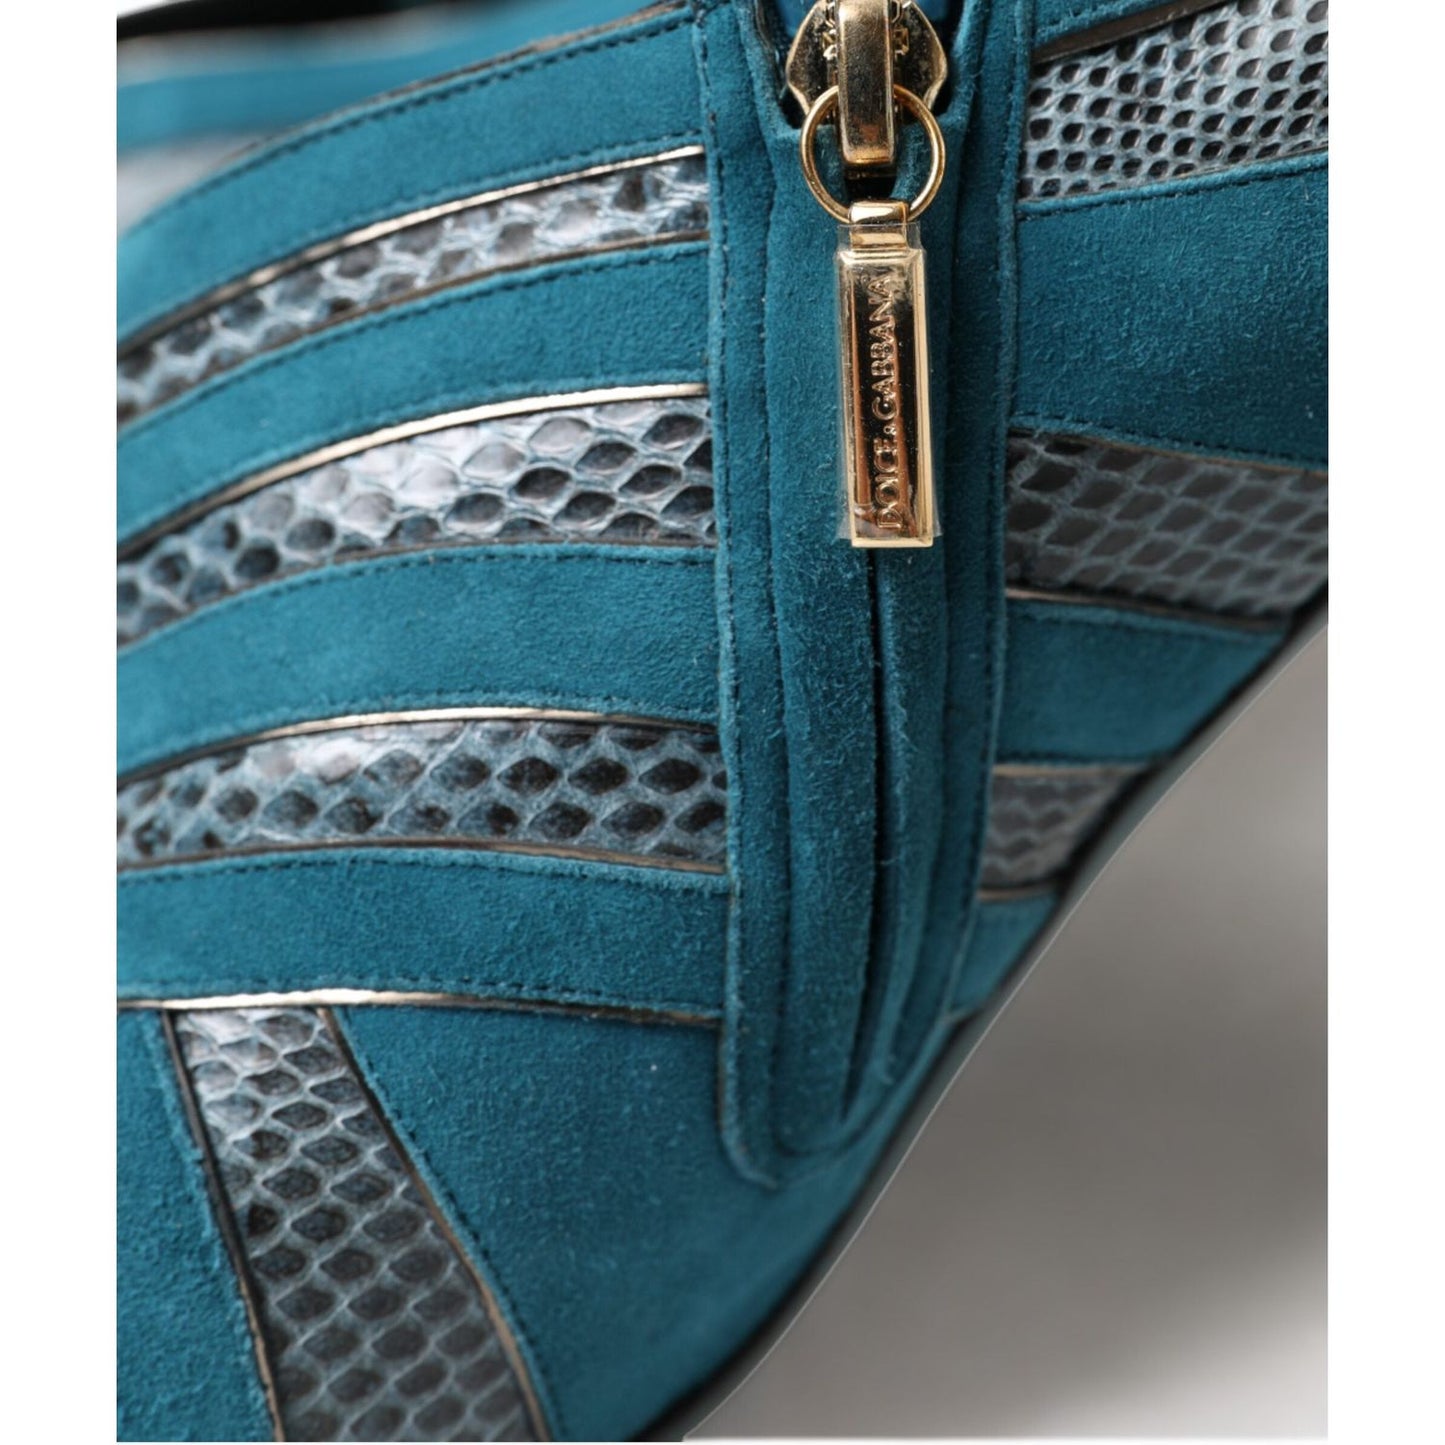 Dolce & GabbanaTeal Suede Peep Toe Heels PumpsMcRichard Designer Brands£529.00